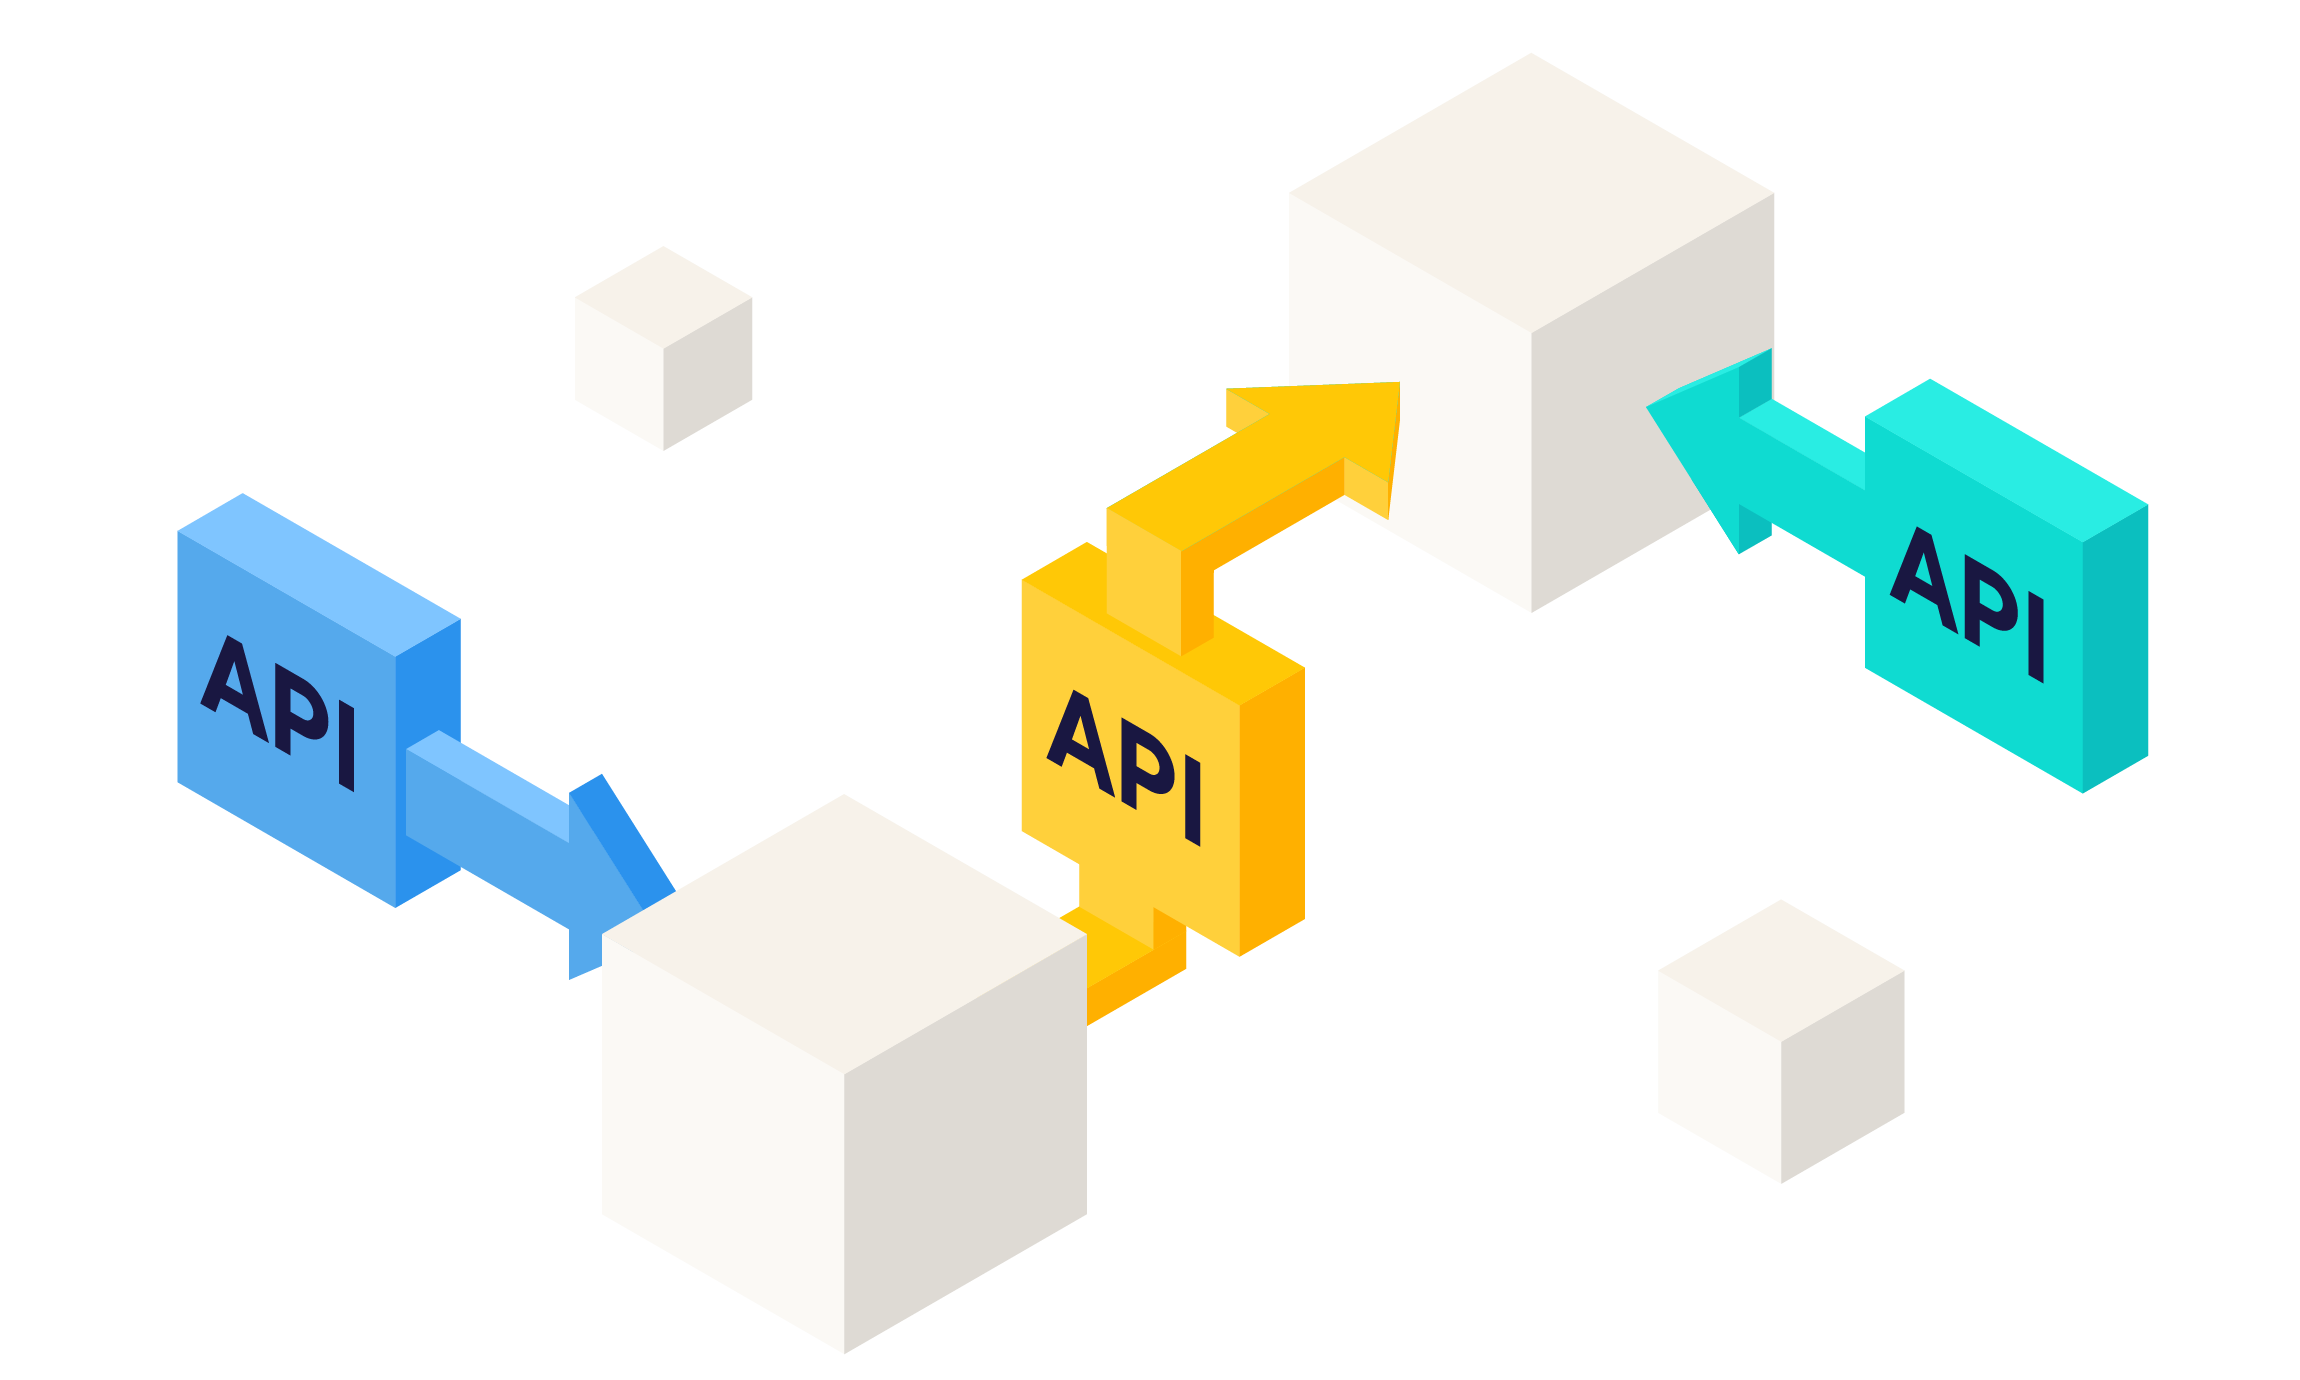 API-centric commerce